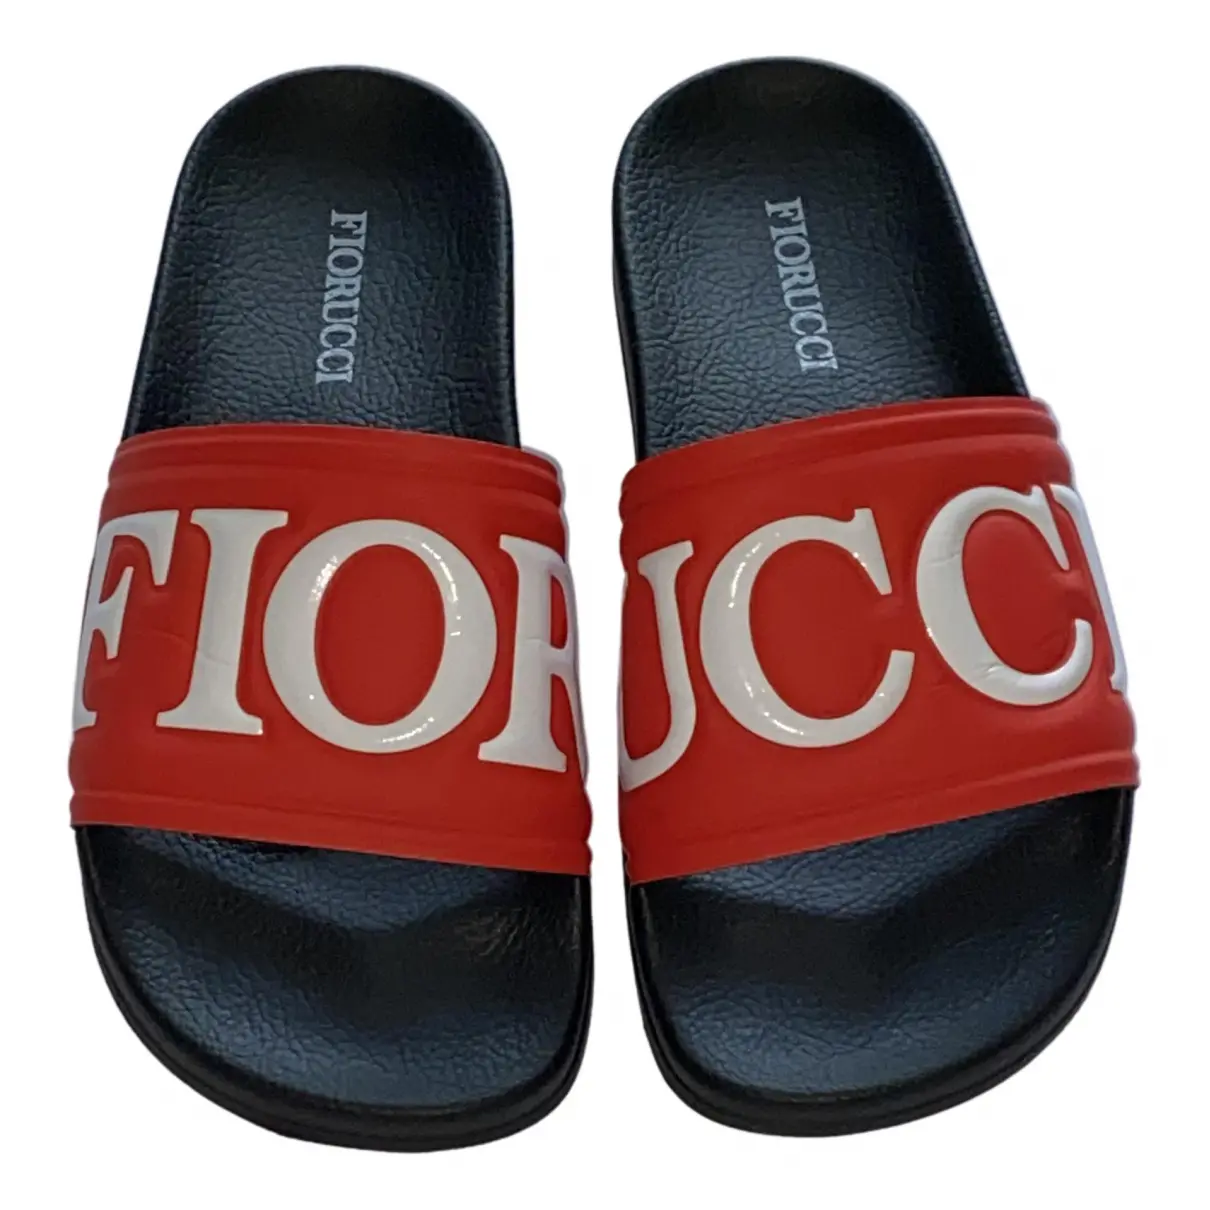 Red Rubber Sandals Fiorucci